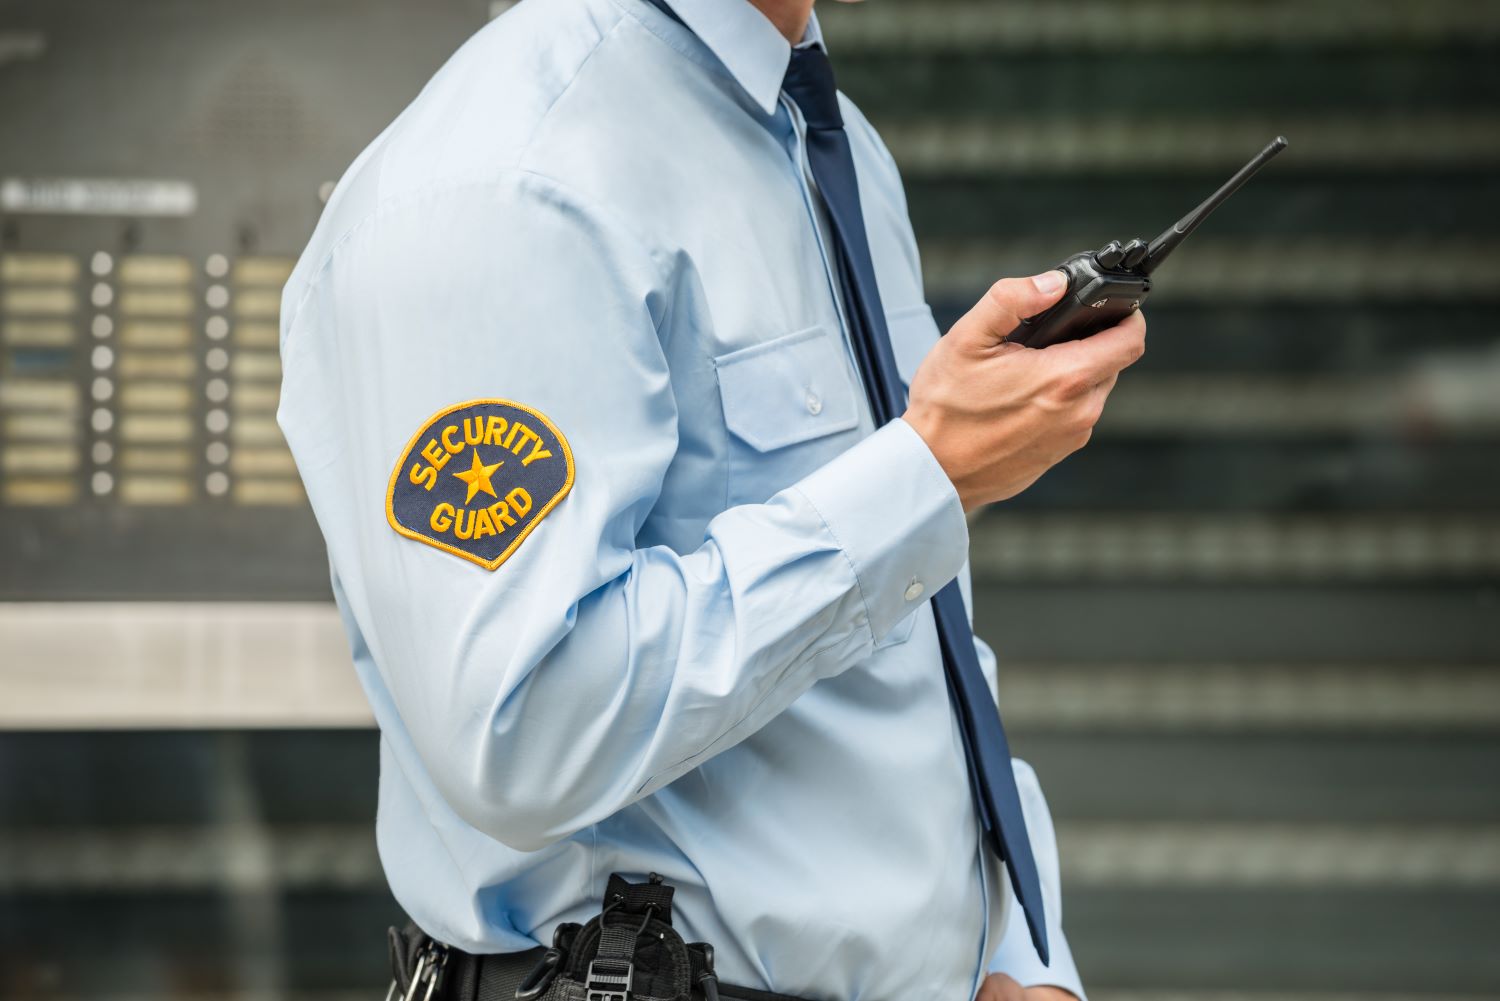 School security guard with portable radio